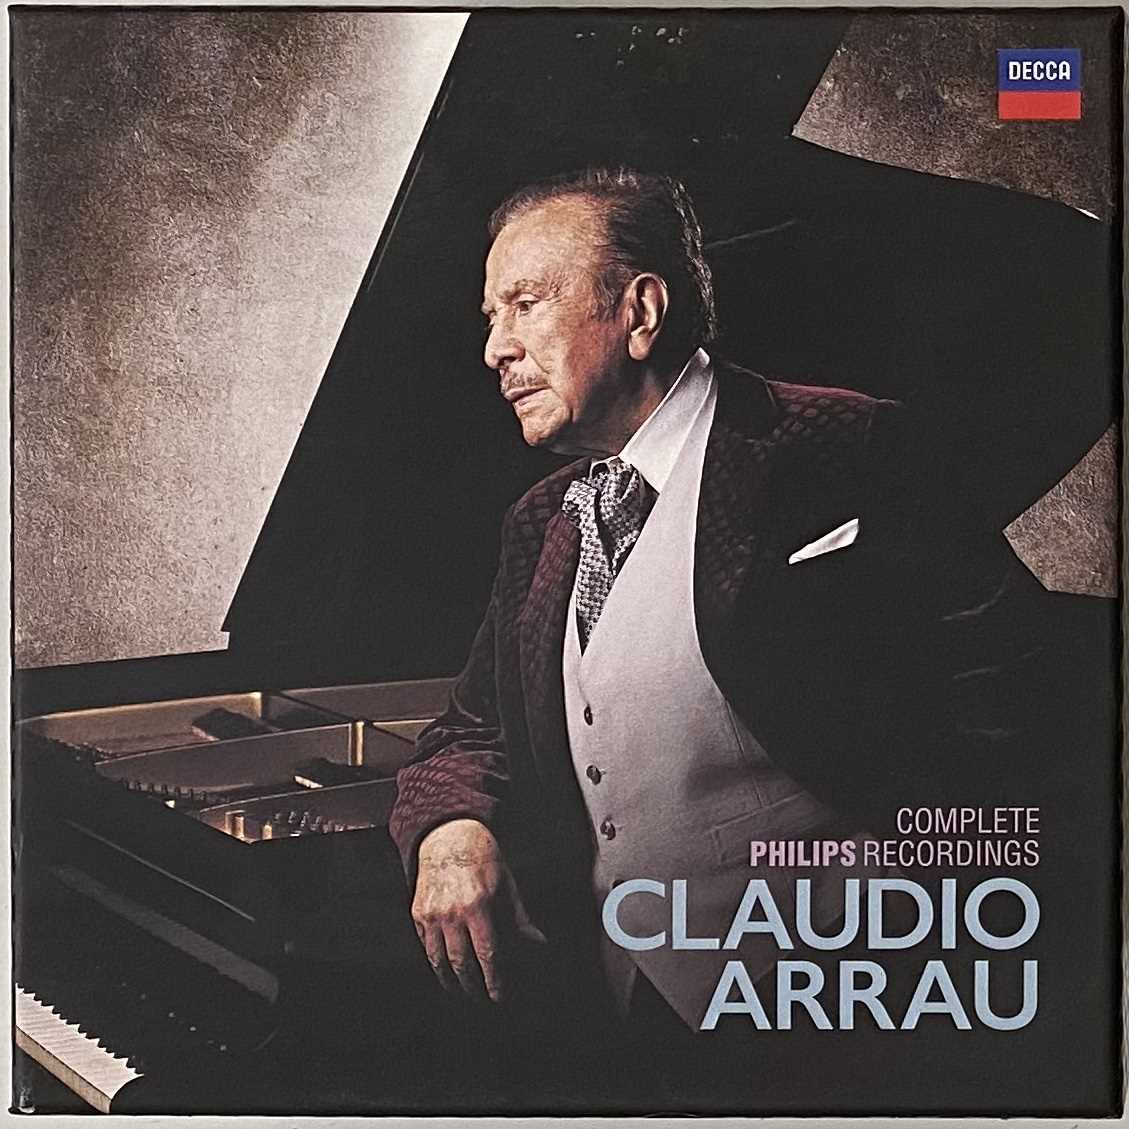 CLAUDIO ARRAU - COMPLETE PHILIPS RECORDINGS CD BOX SET (80 CD SET - 483 2984)